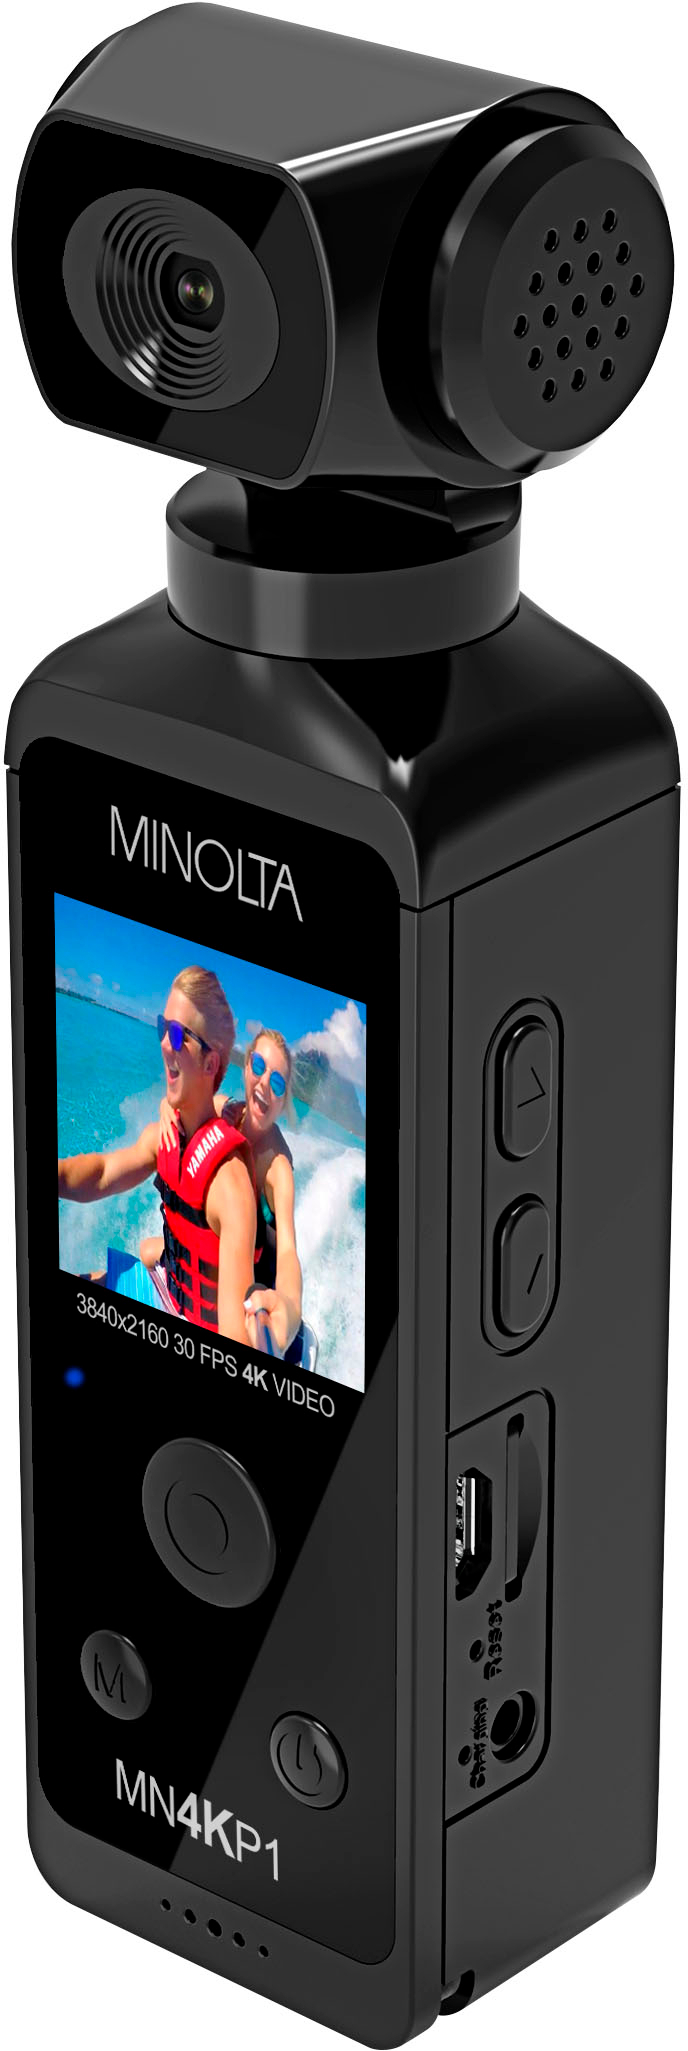 Back View: Minolta - MN4KP1 4K Video 16.0-Megapixel Waterproof Camcorder Bundle - Black